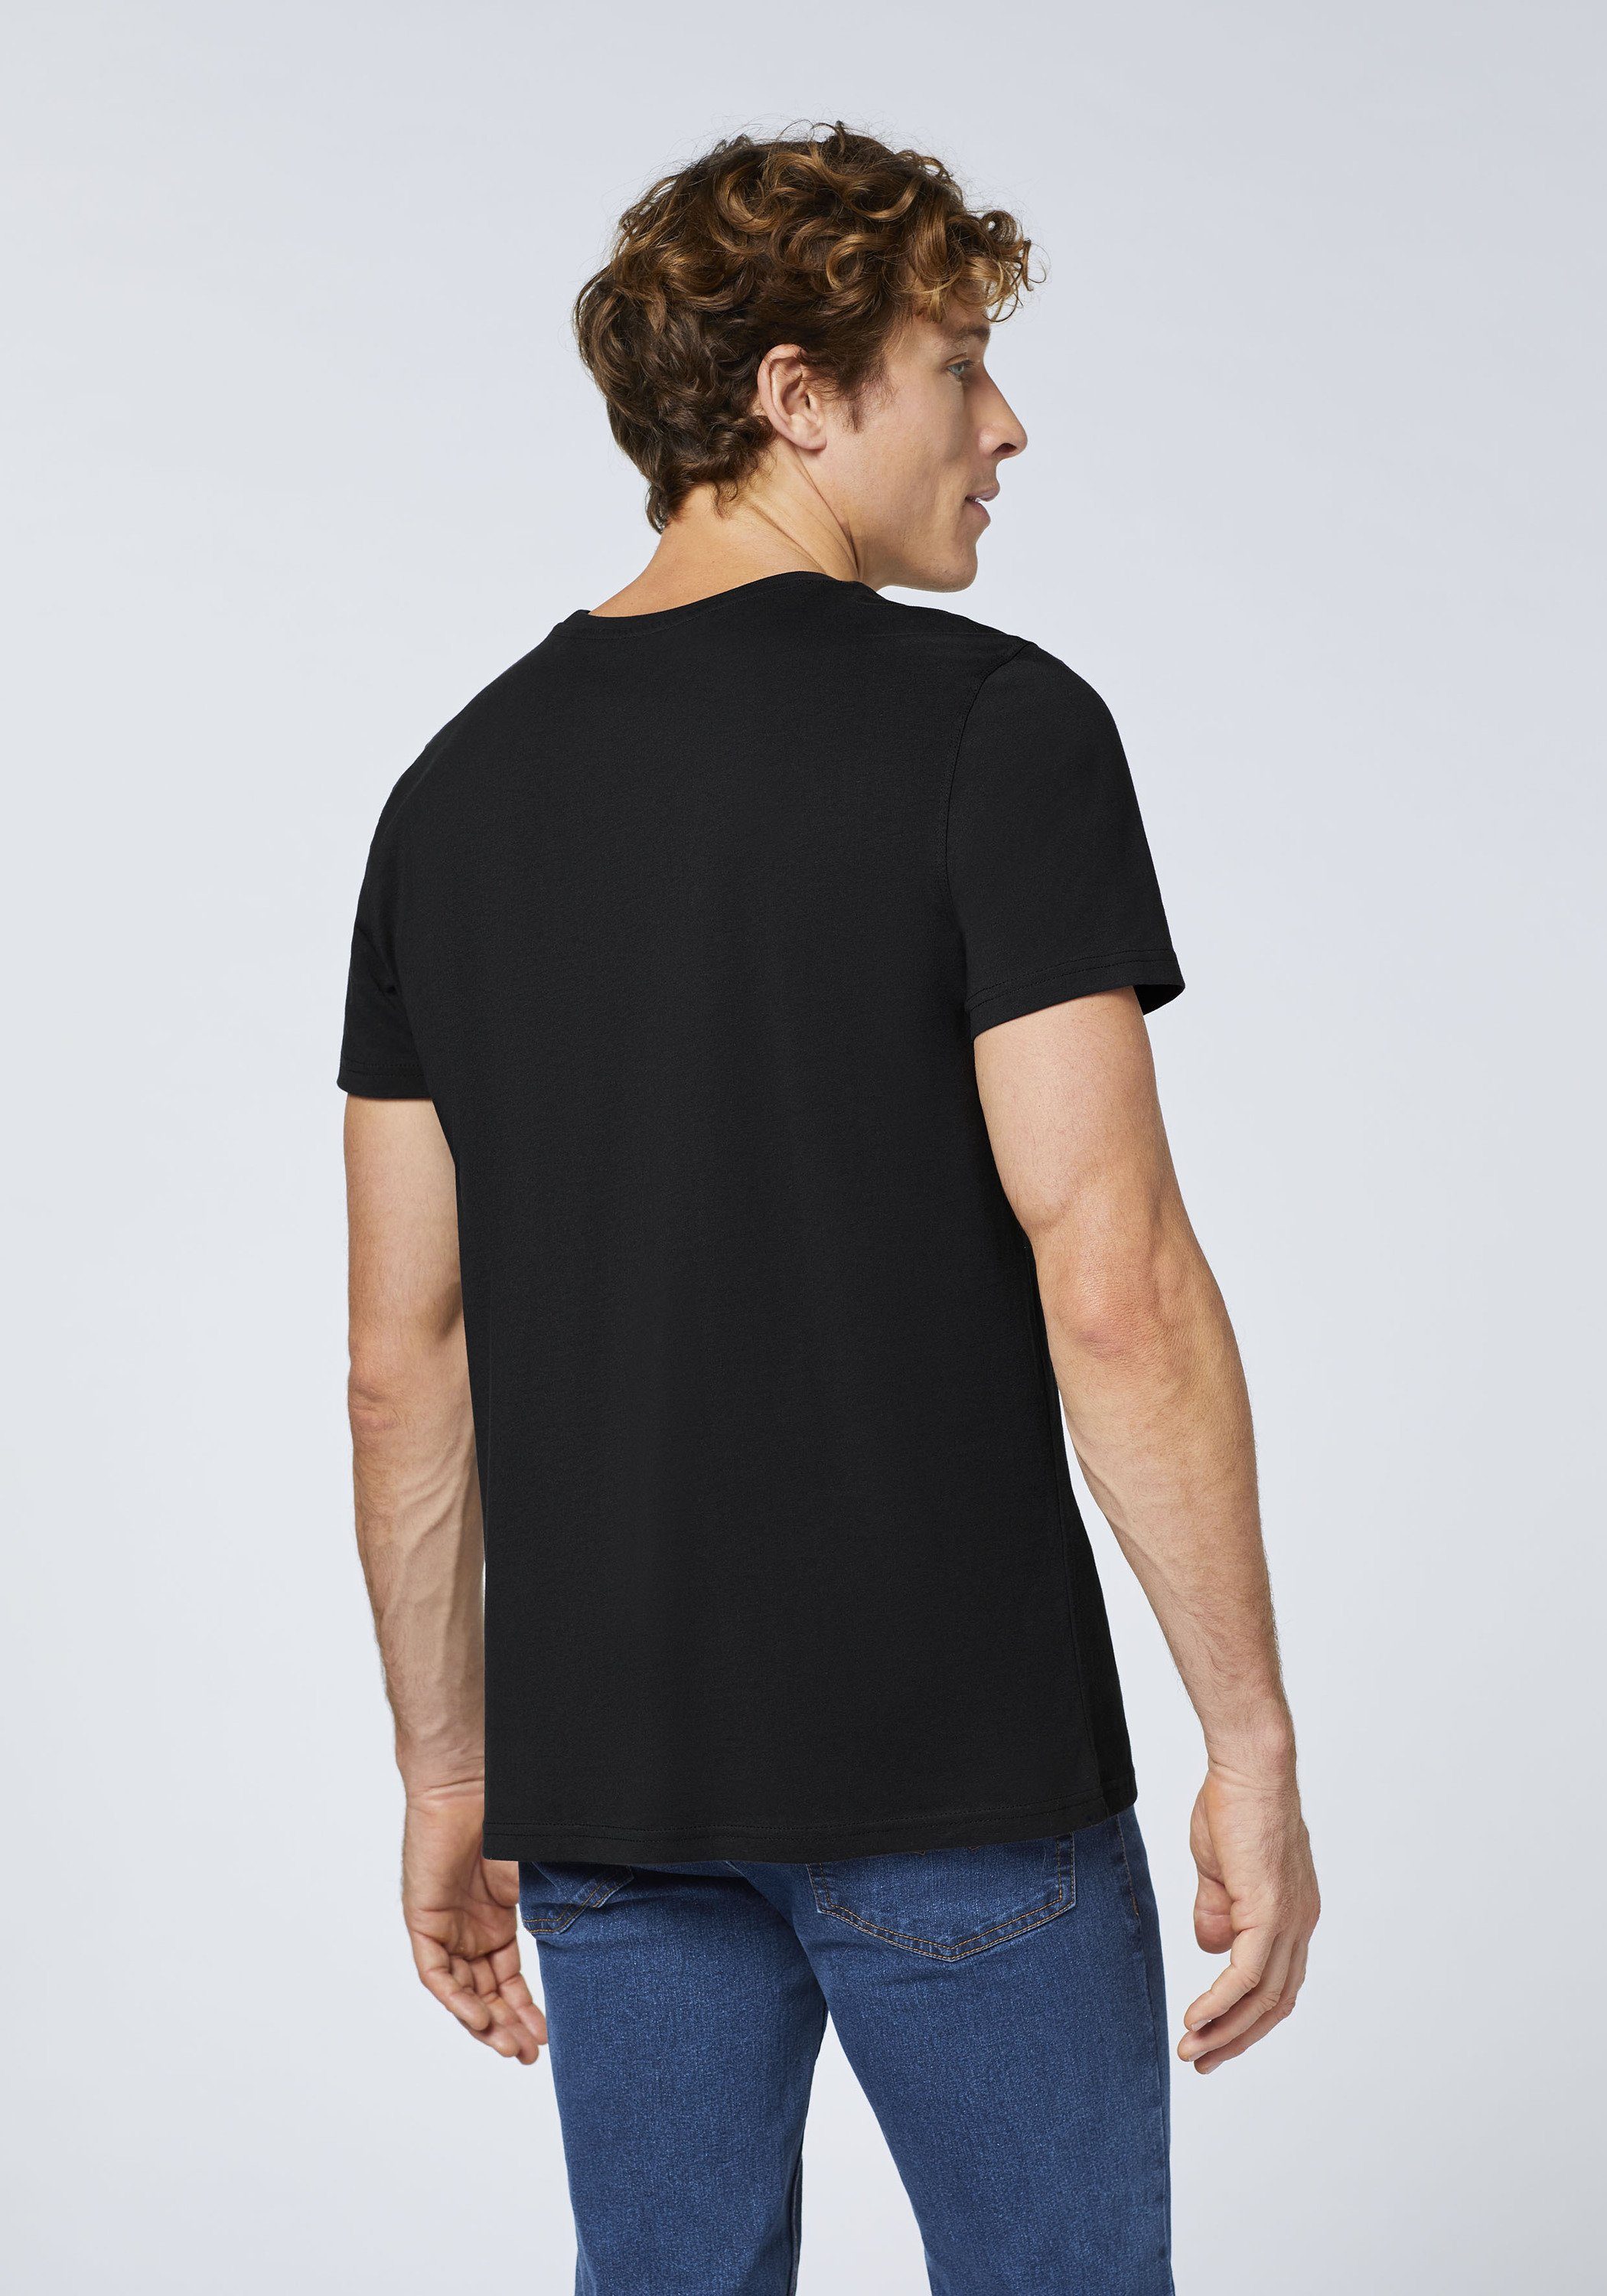 Label-Look Oklahoma Black neuen Print-Shirt Jeans 19-3911 Beauty im